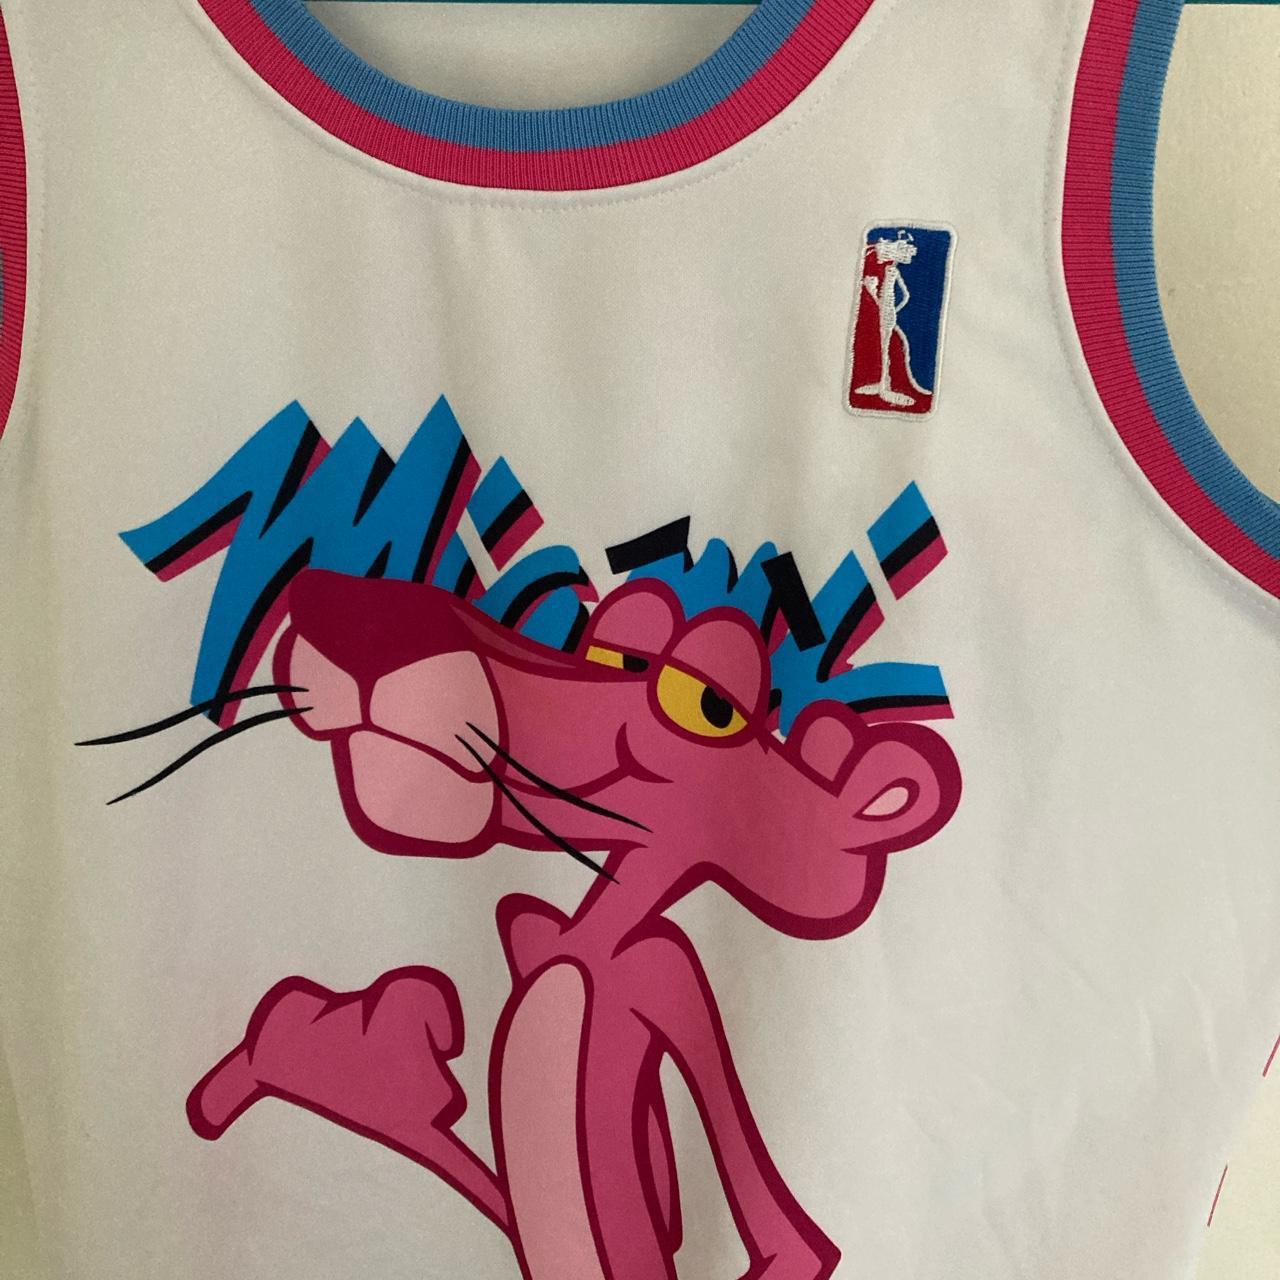 Men's Miami Heat Panther Basketball shorts. Brand - Depop